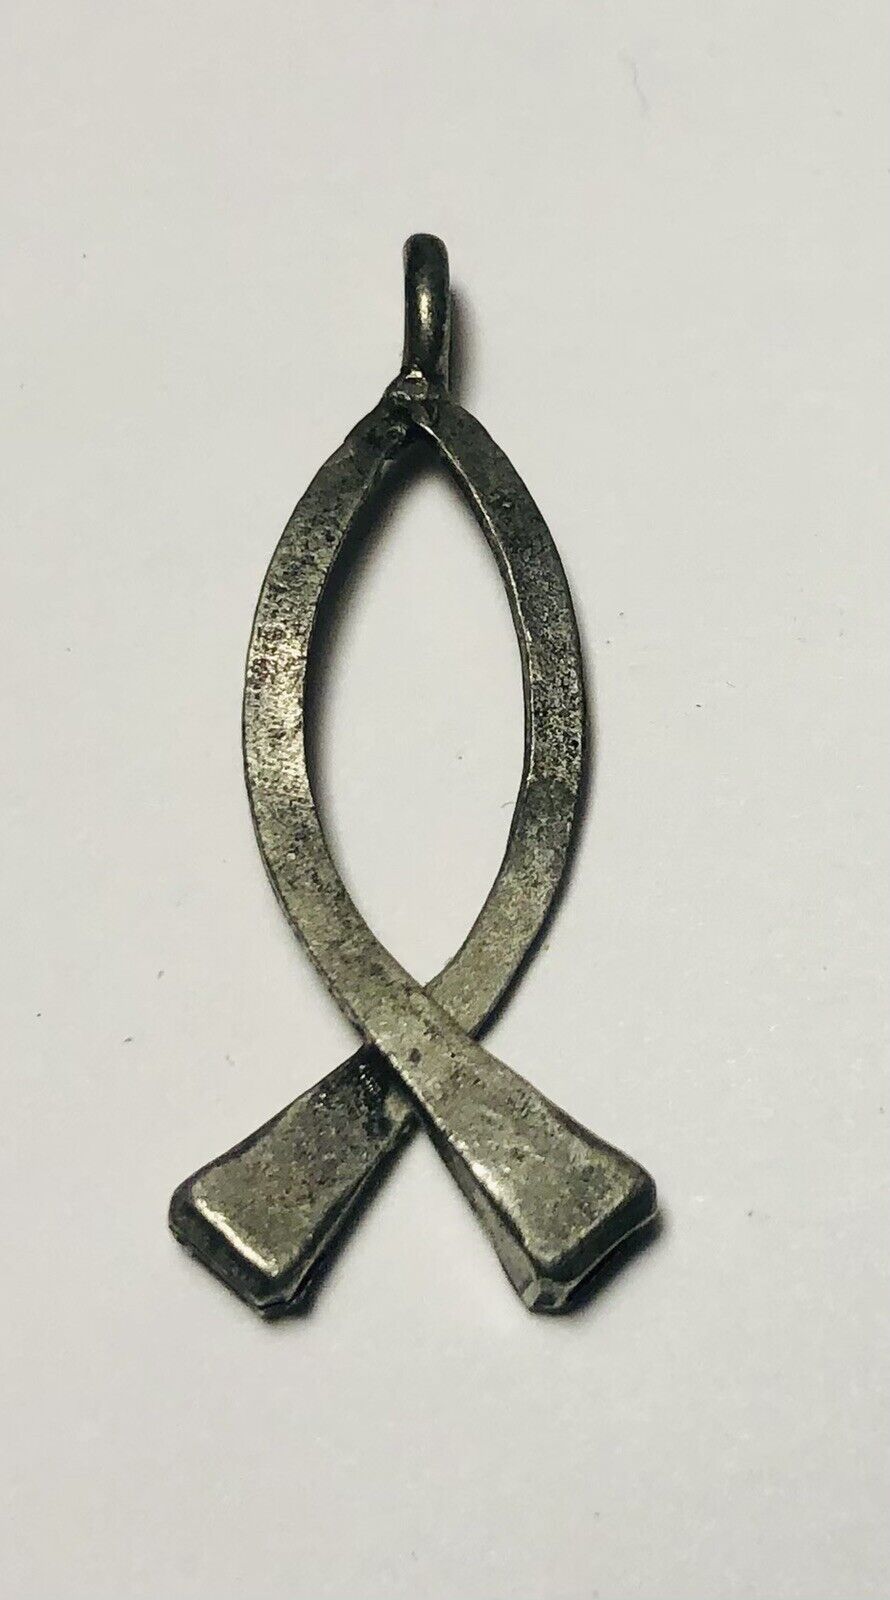 Antique silver Religious fish symbol Pendant hand forged rare.